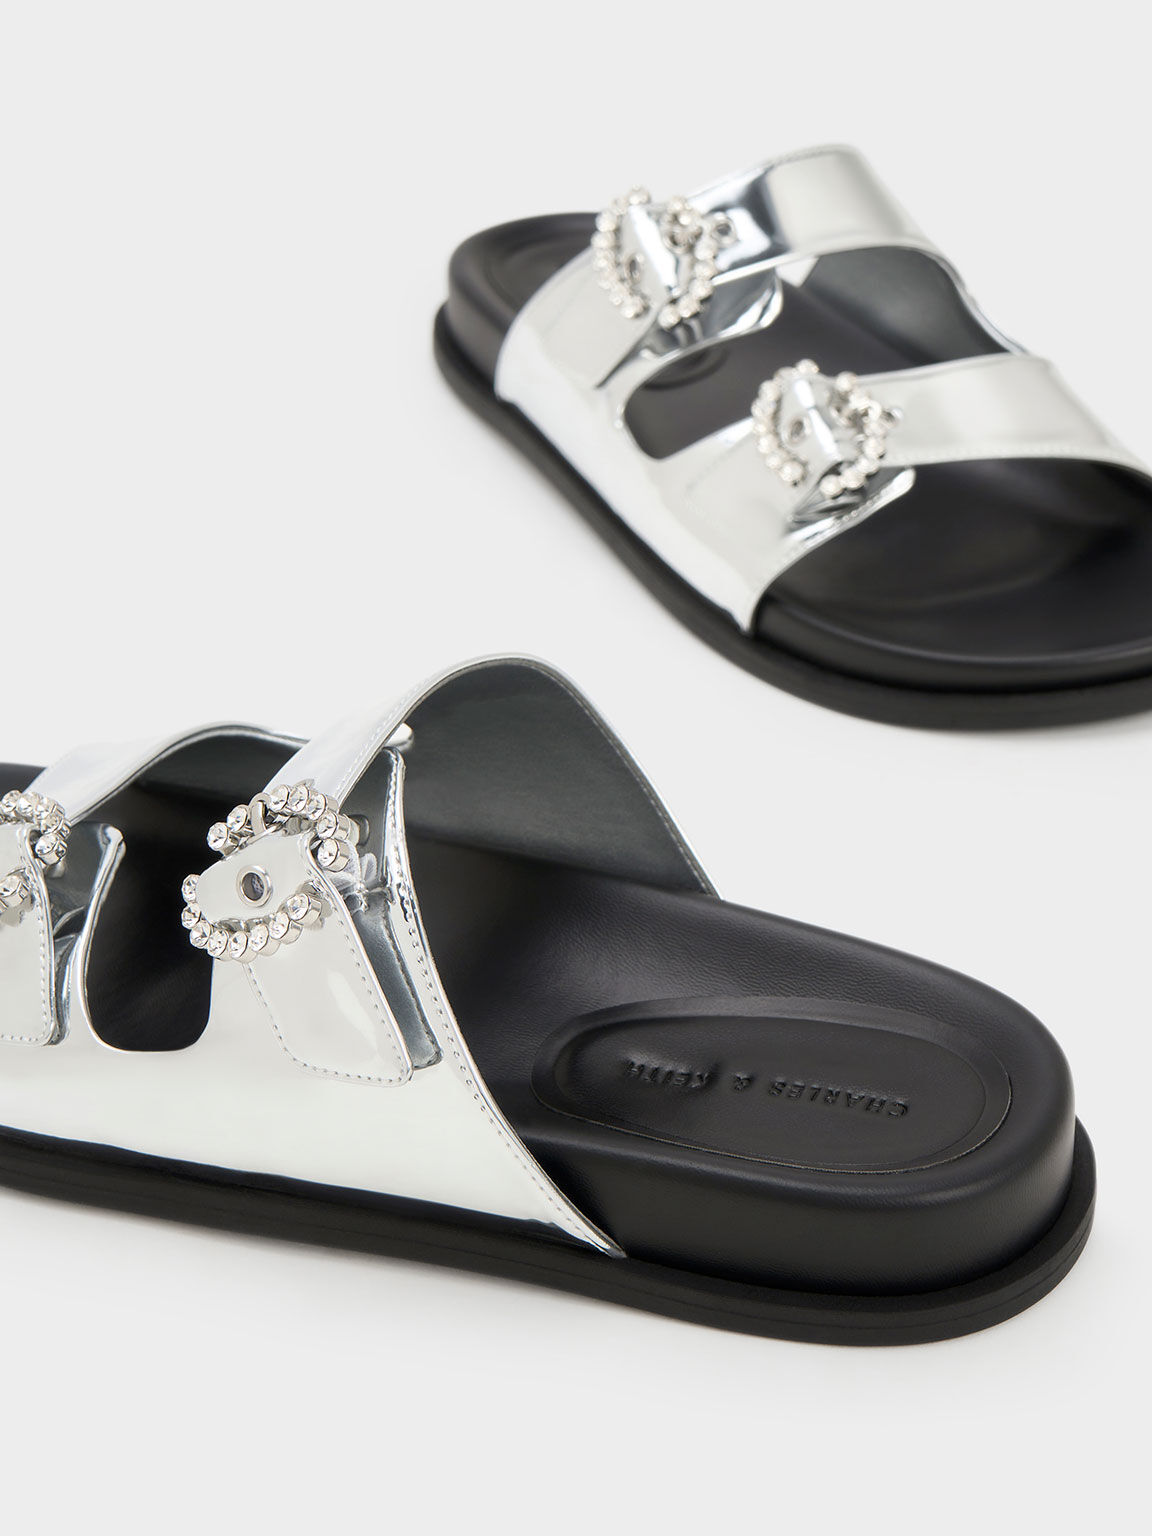 Glaeswen Women's Bright Multi Flat Sandals | Aldo Shoes